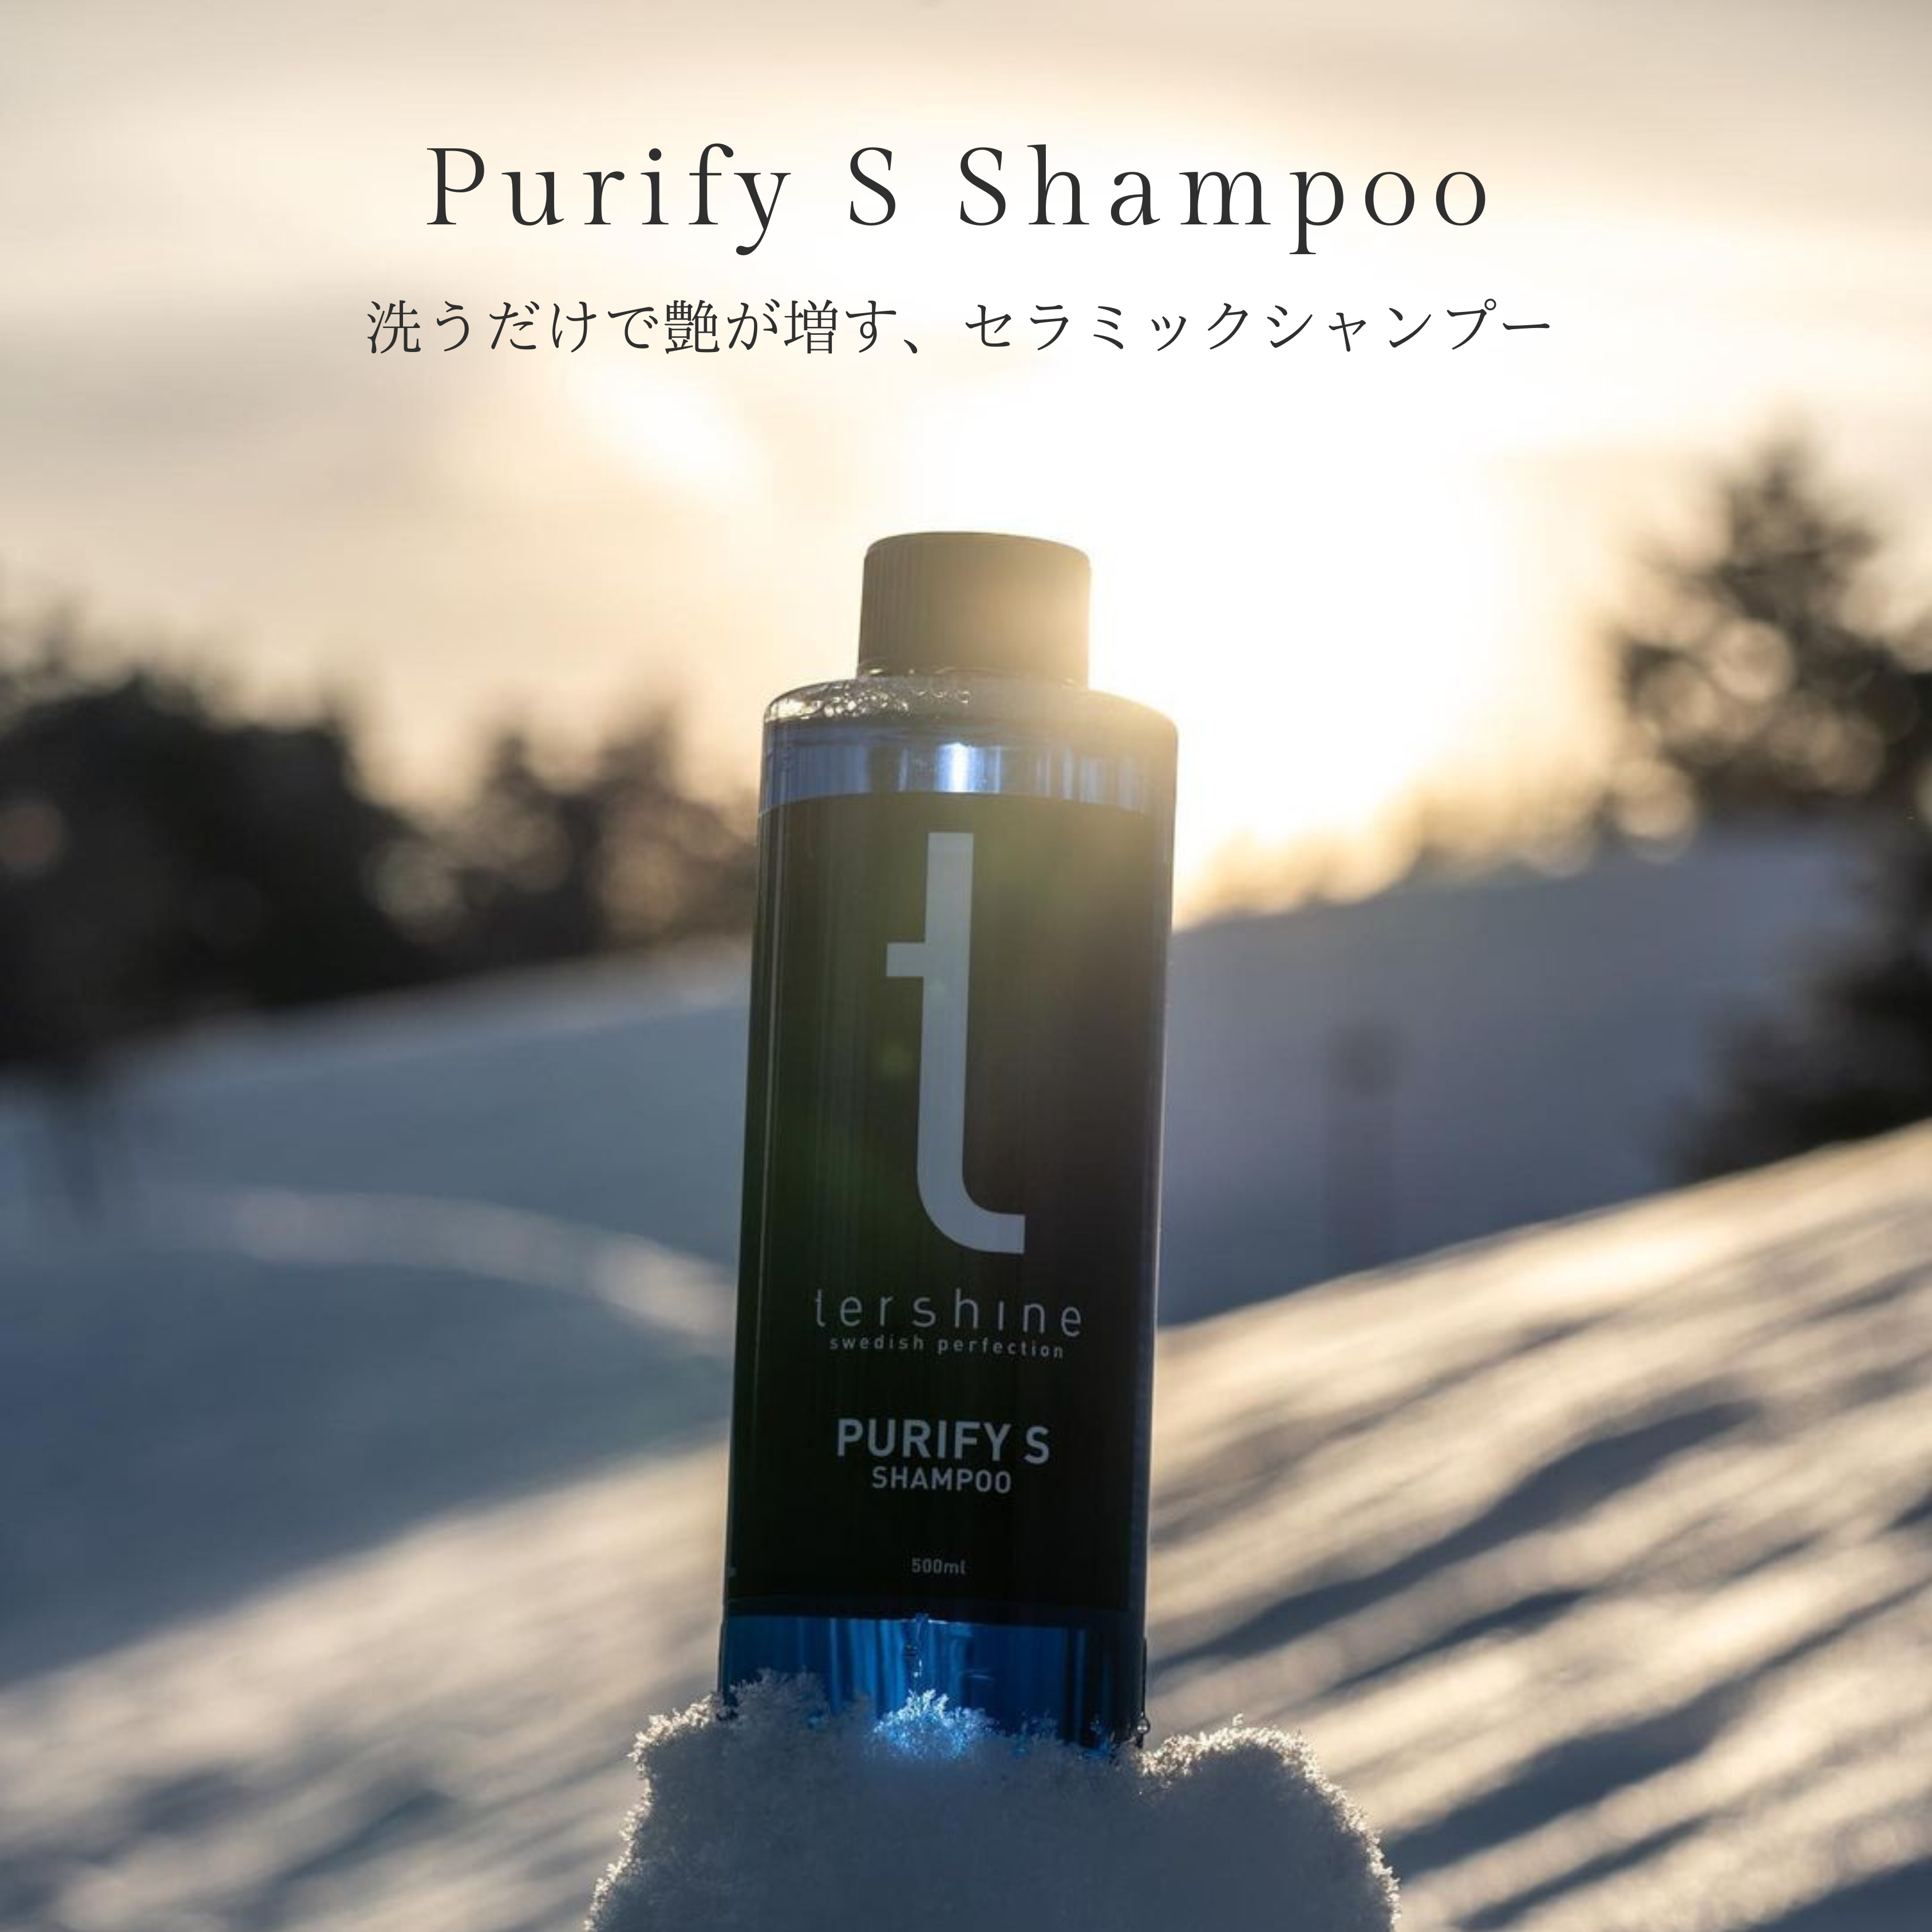 Purify S Shampoo | セラミックシャンプー